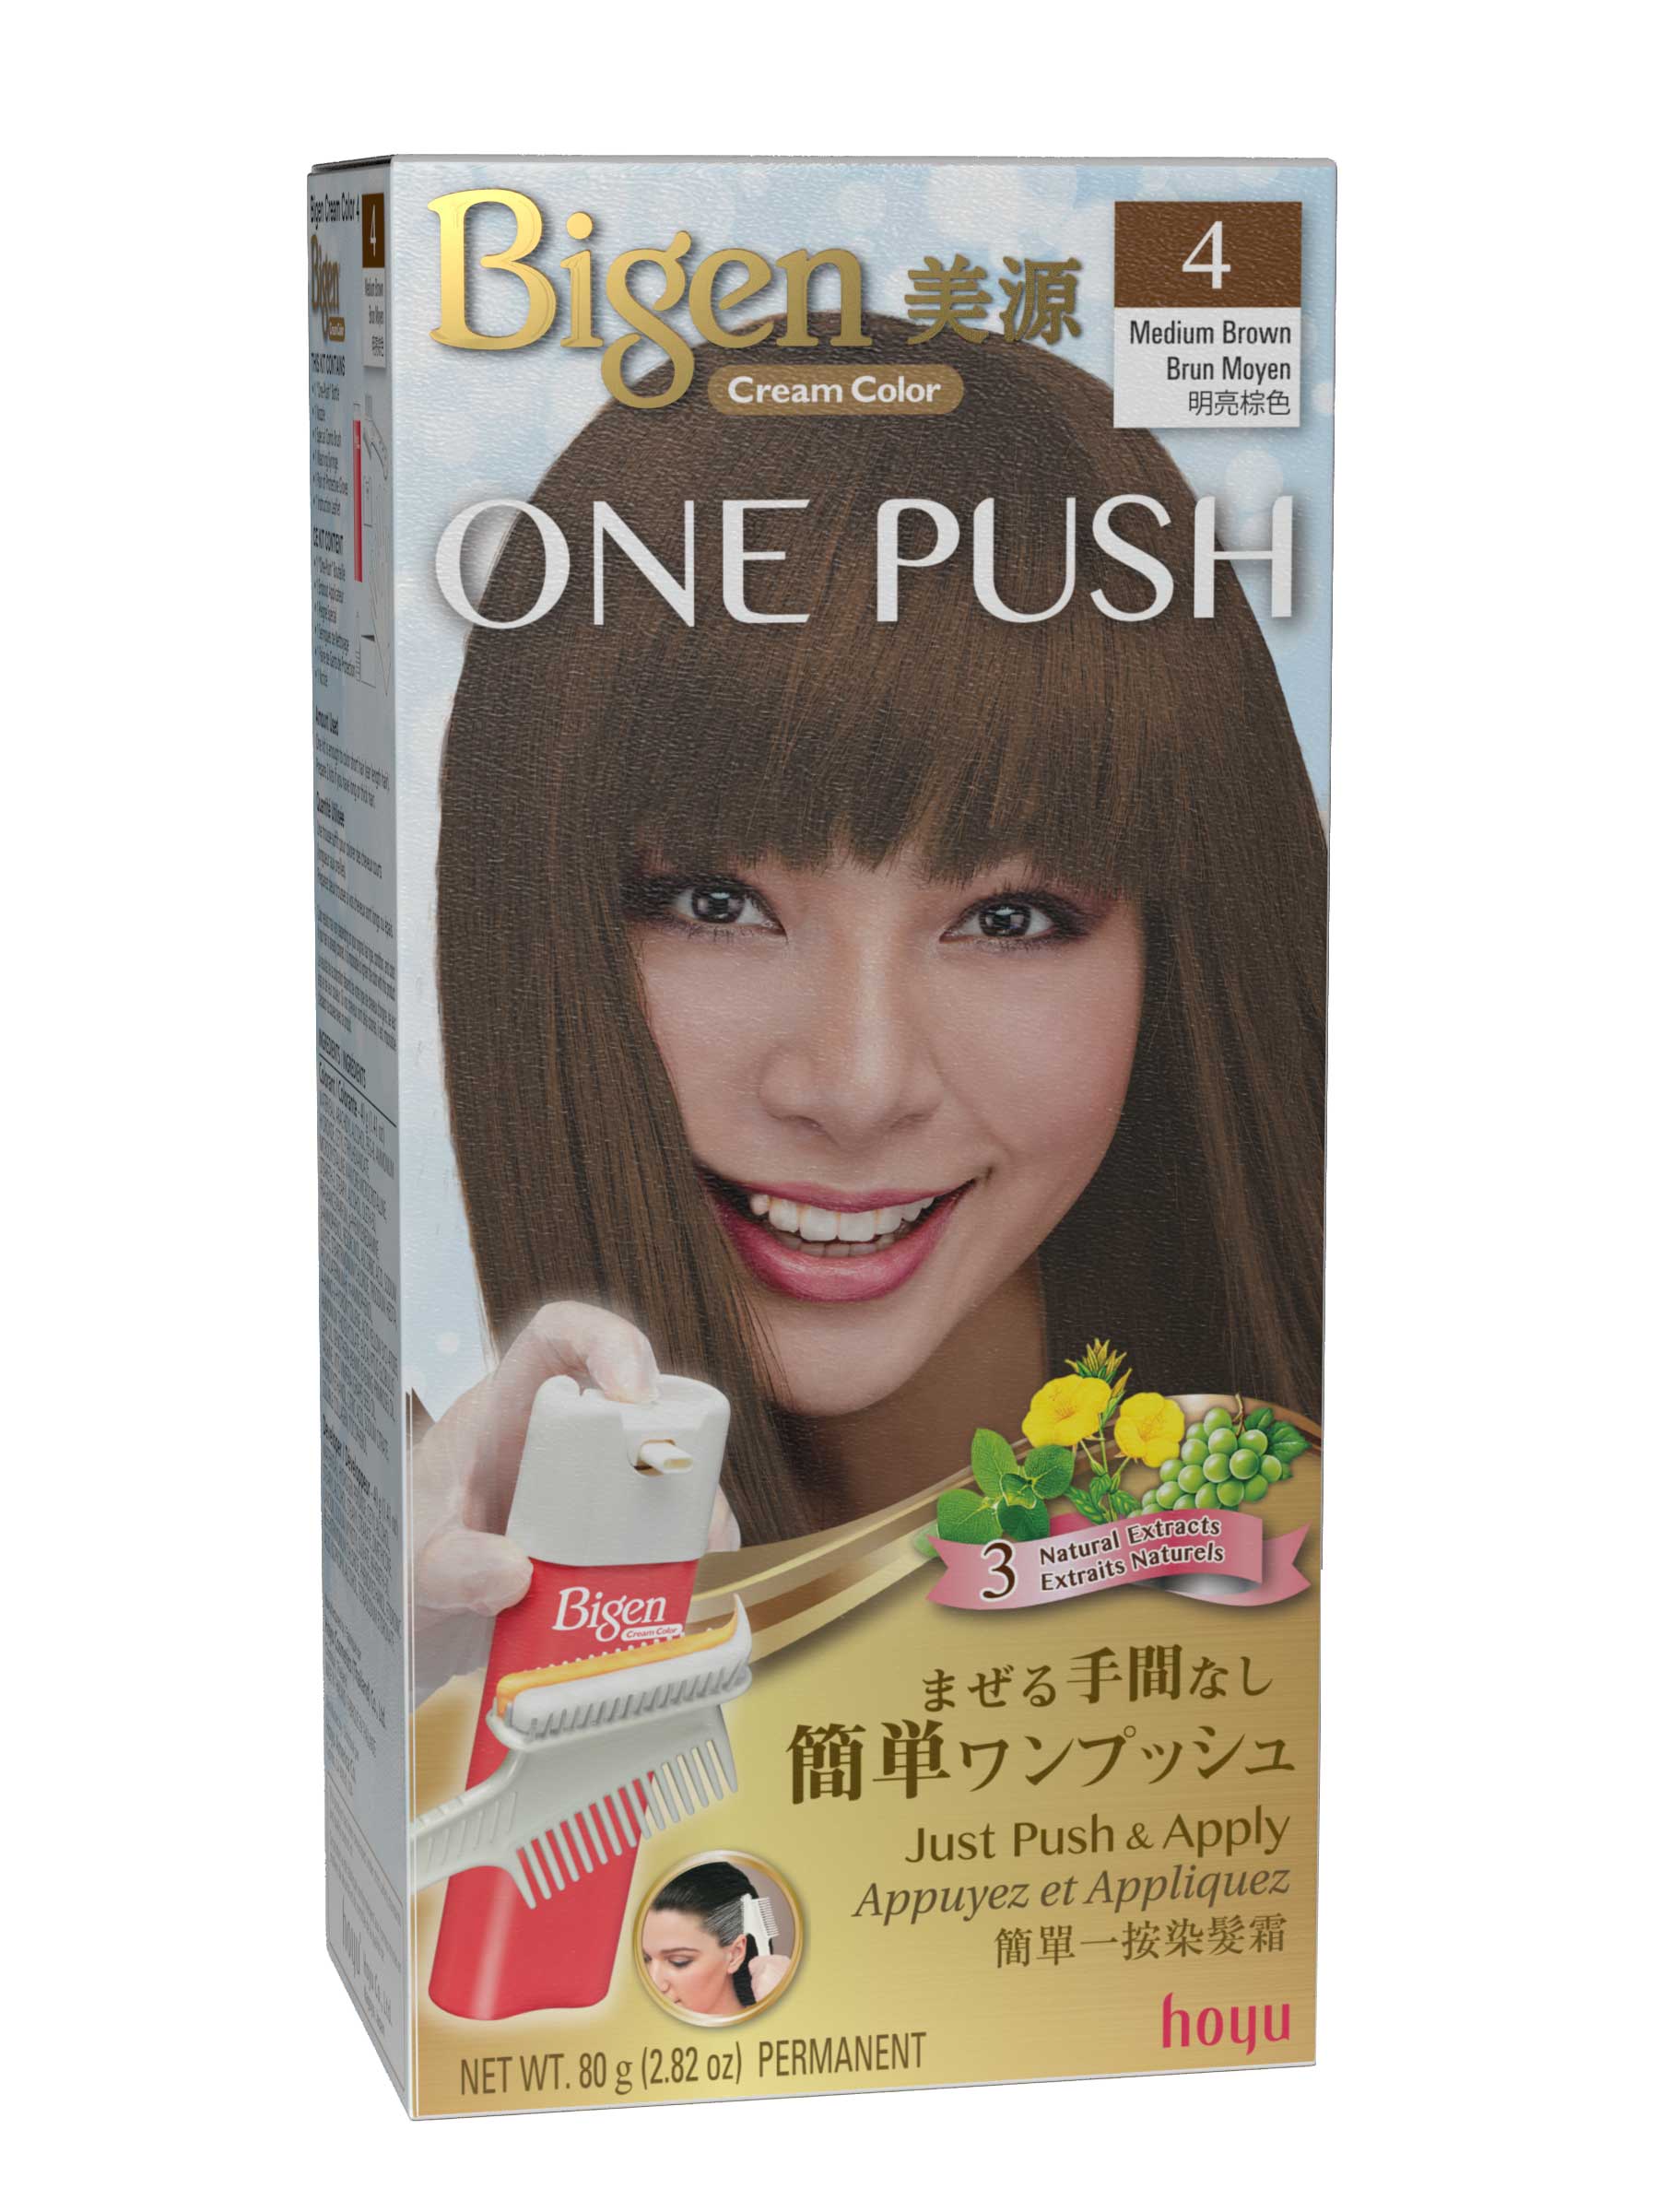 4-One Push